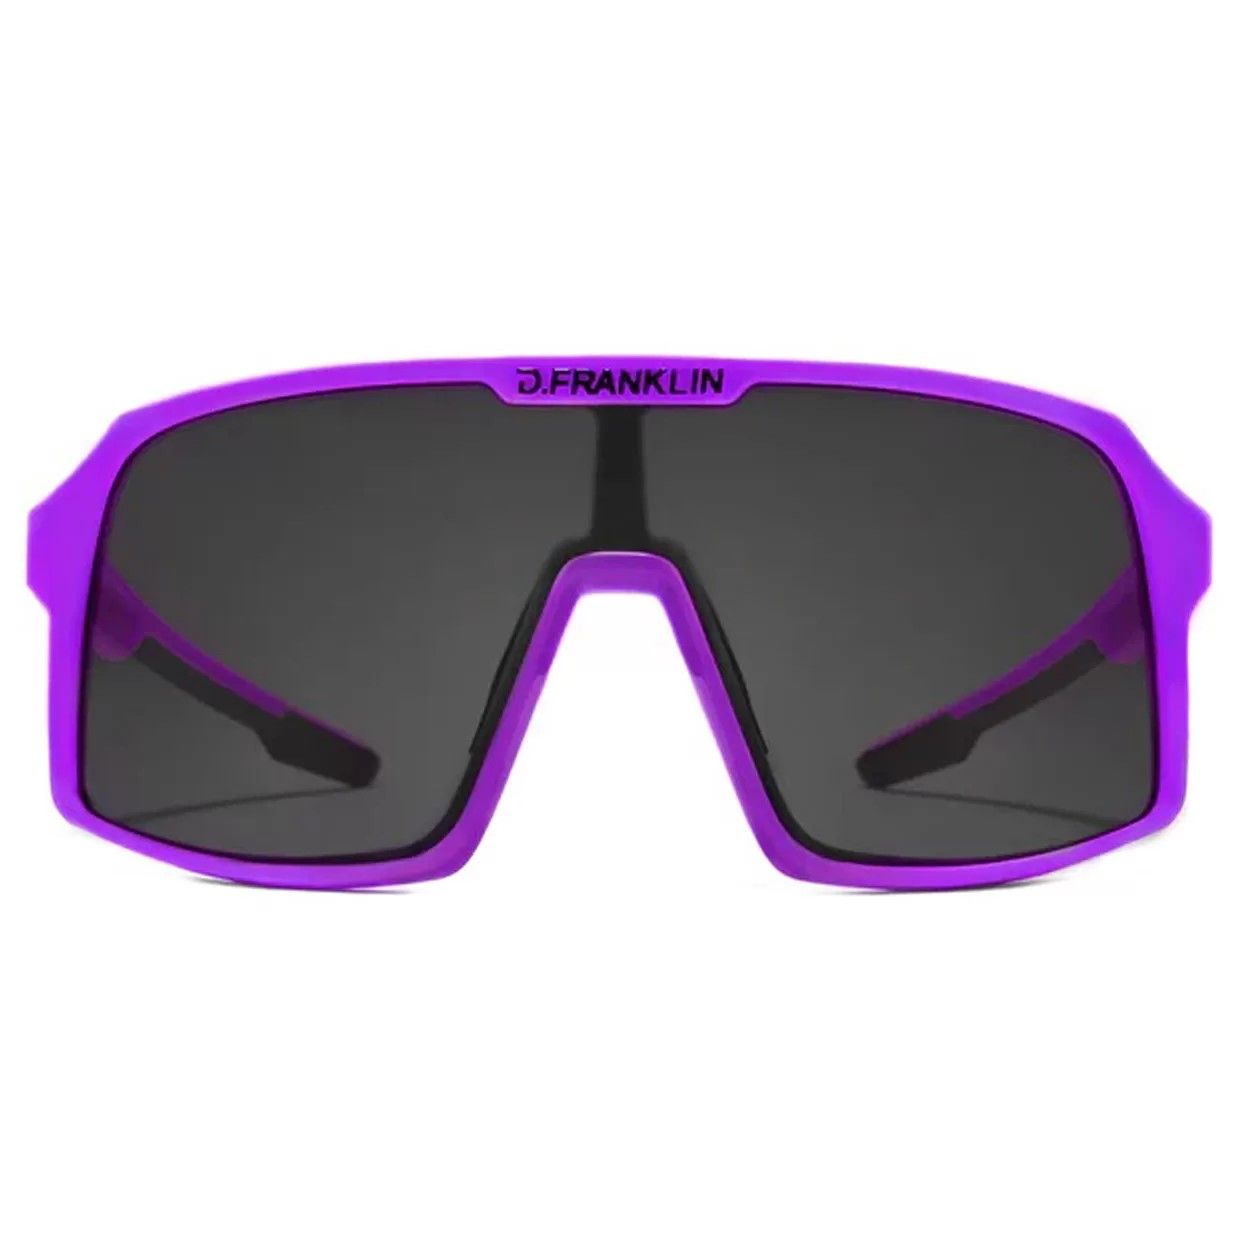 عینک آفتابی دیفرنکلین مدل D.franklin Wind Purple-Black -  - 1